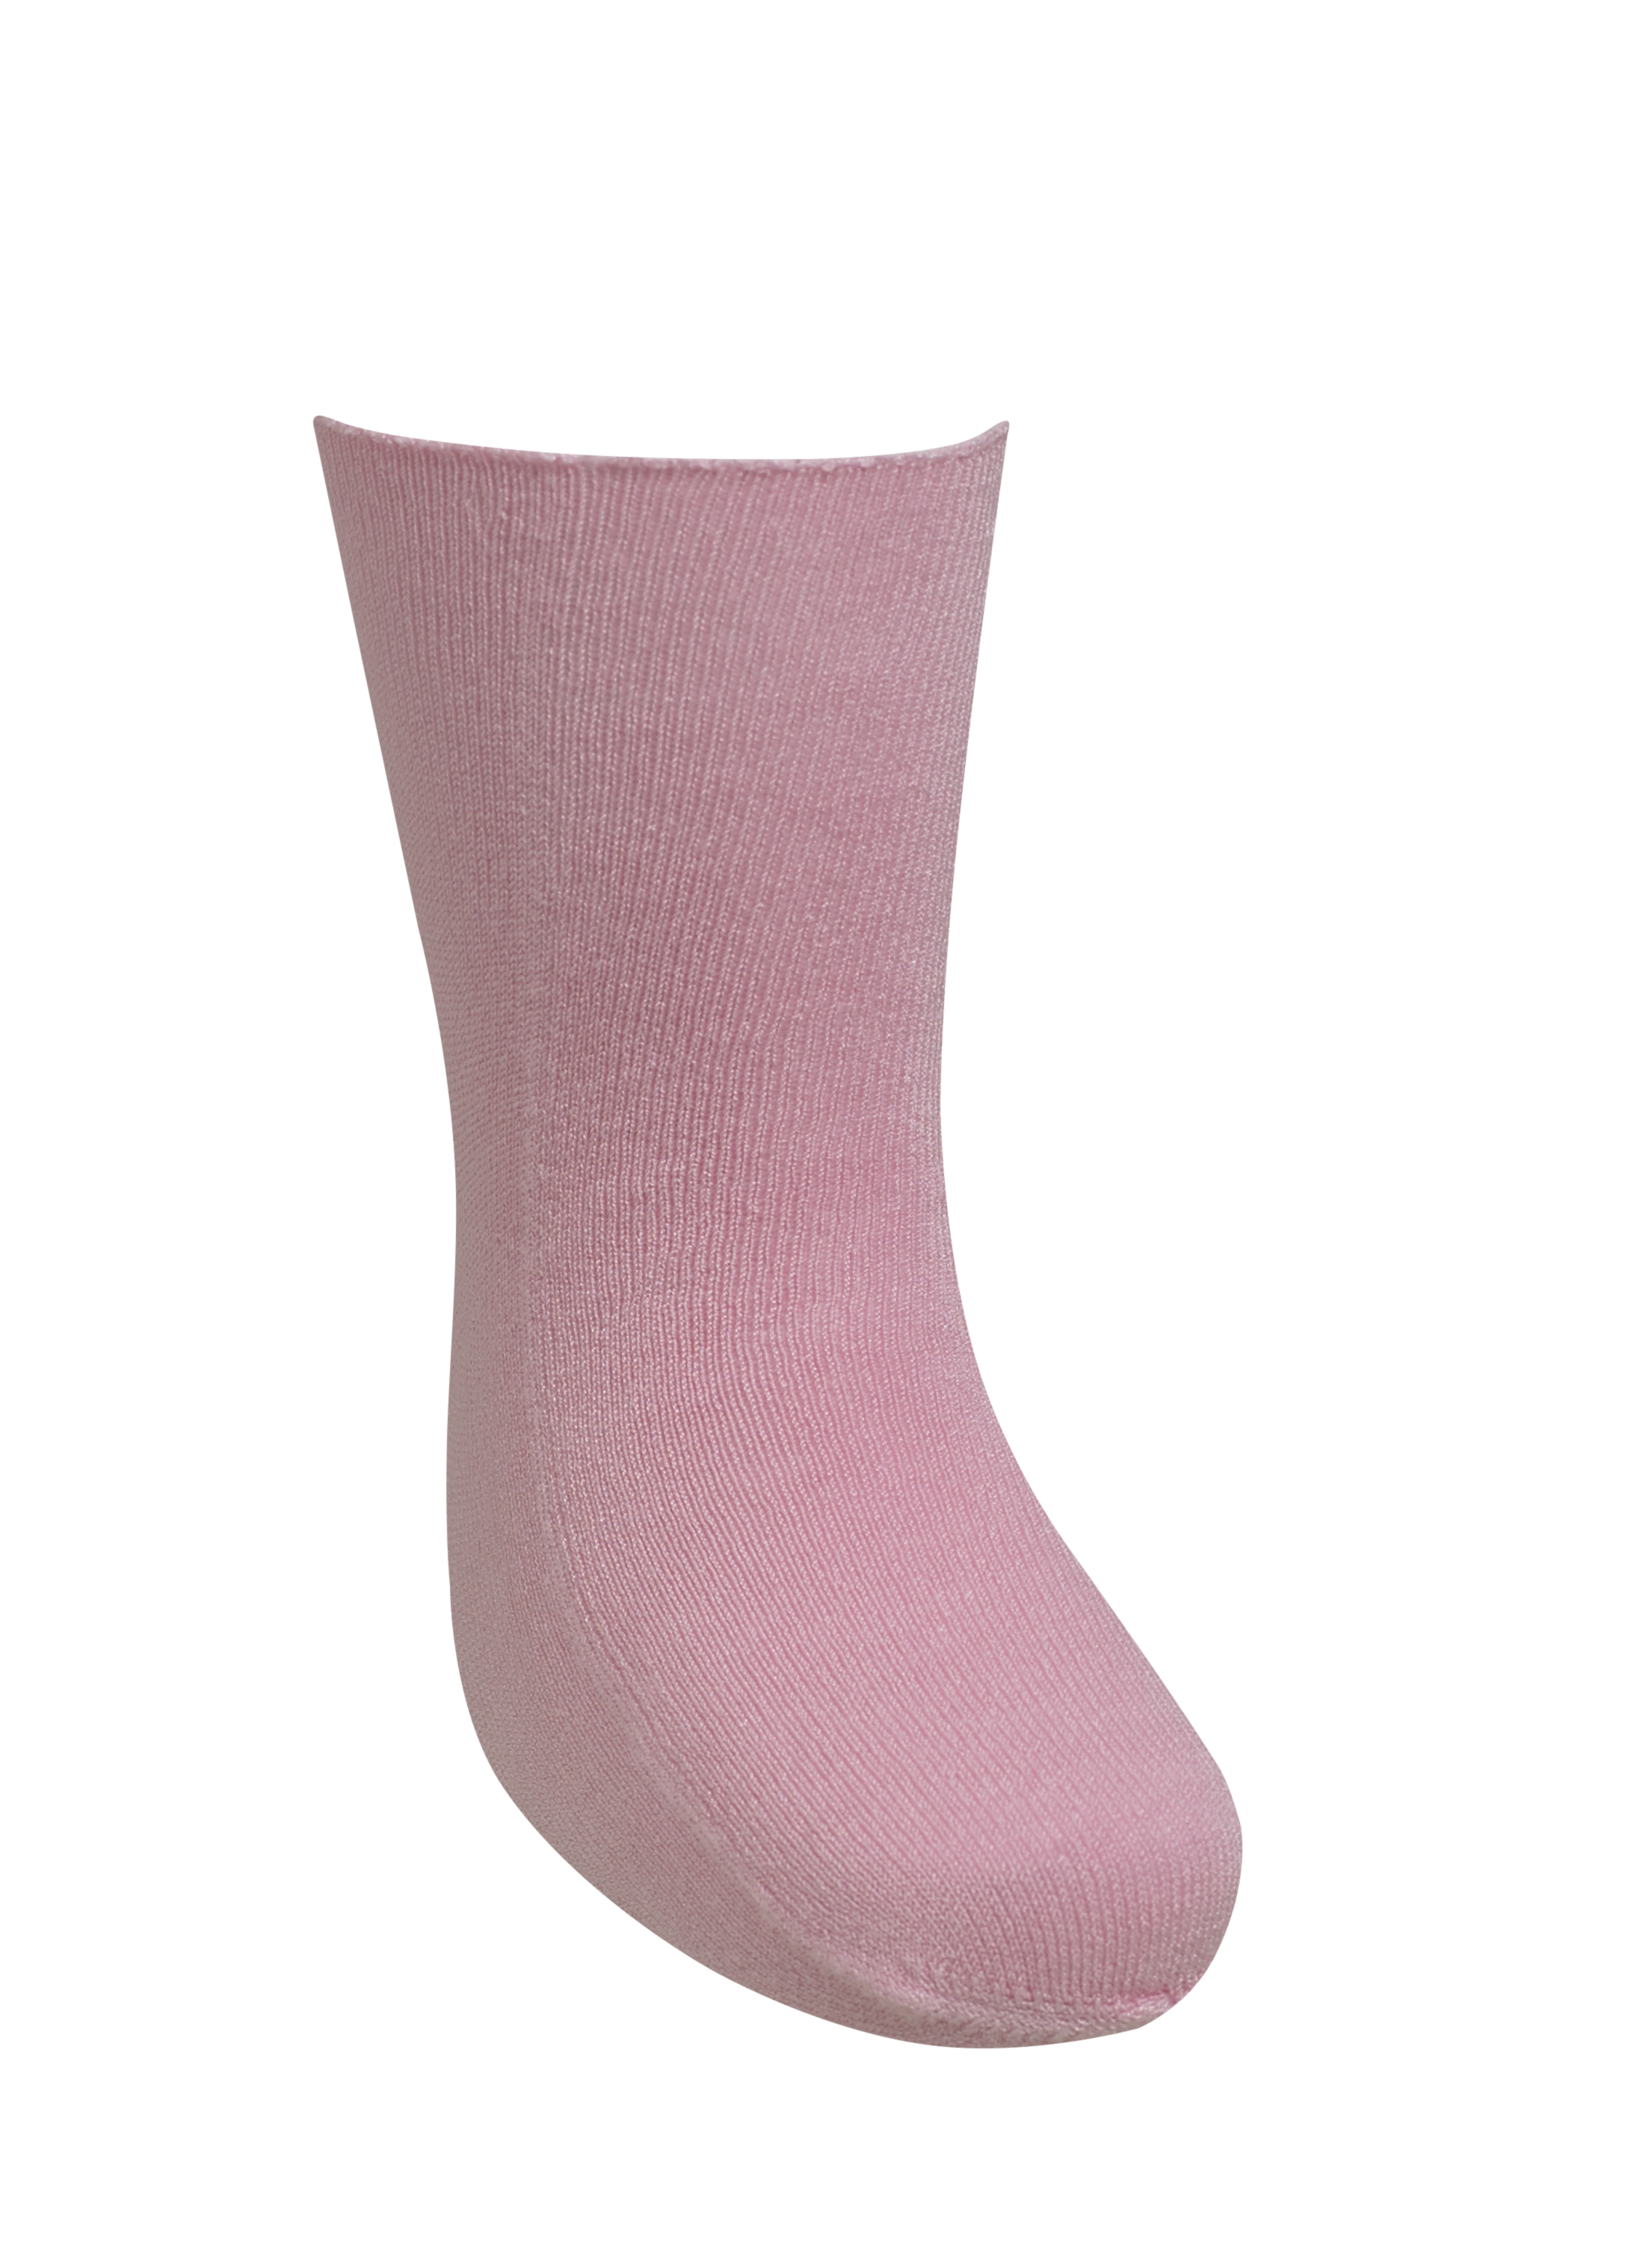 Skinnies sokker silke str 6md-8år, 6m-8yr